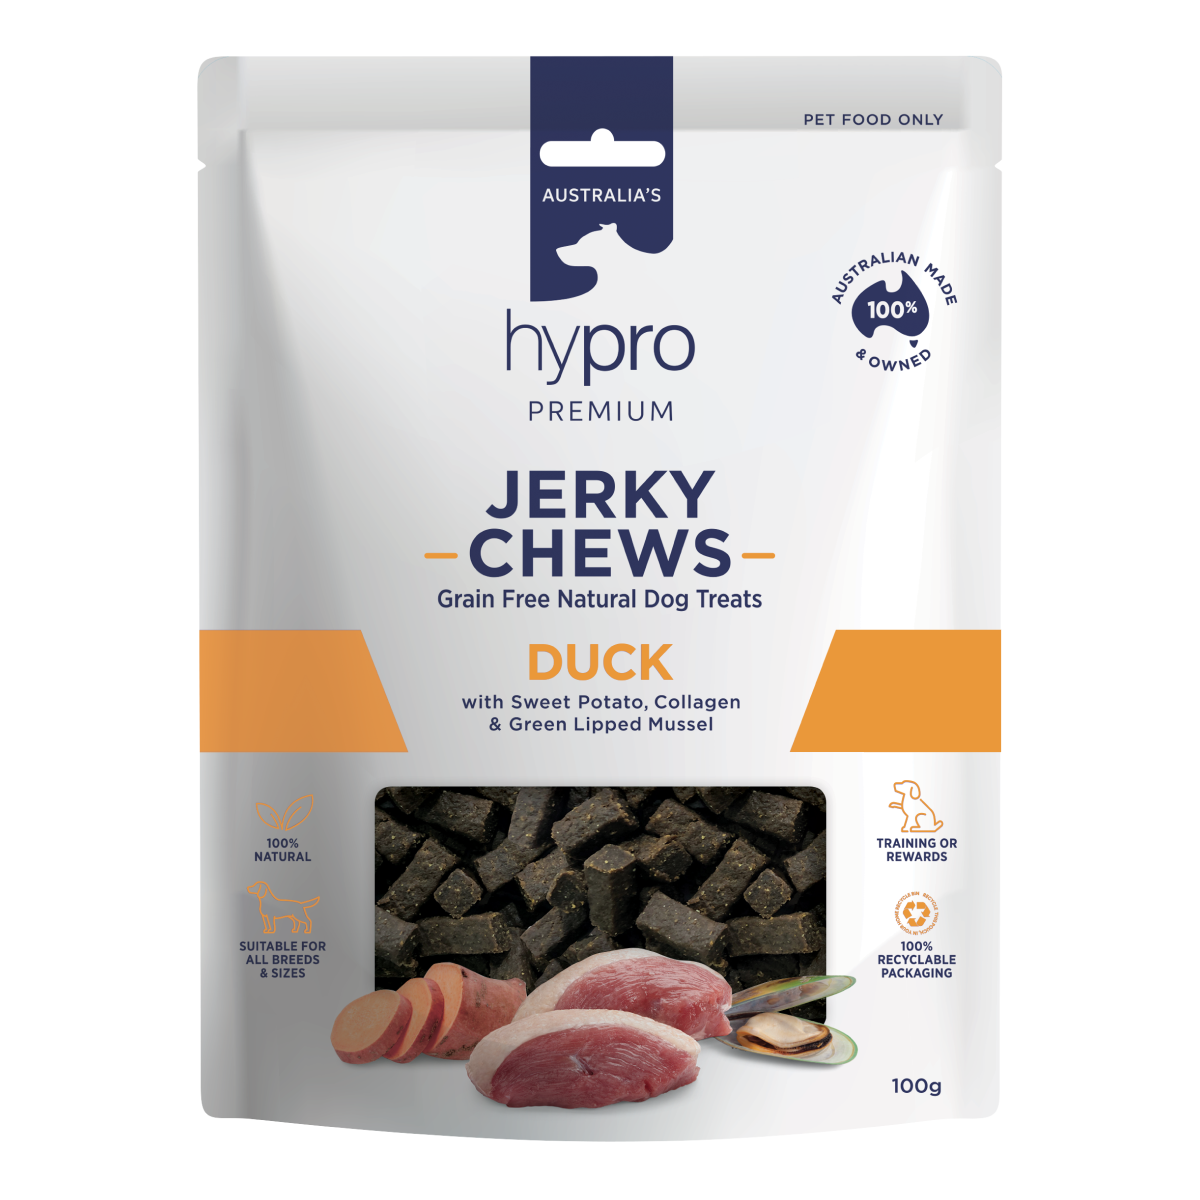 Hypro Premium Jerky Chews Duck Dog Treats